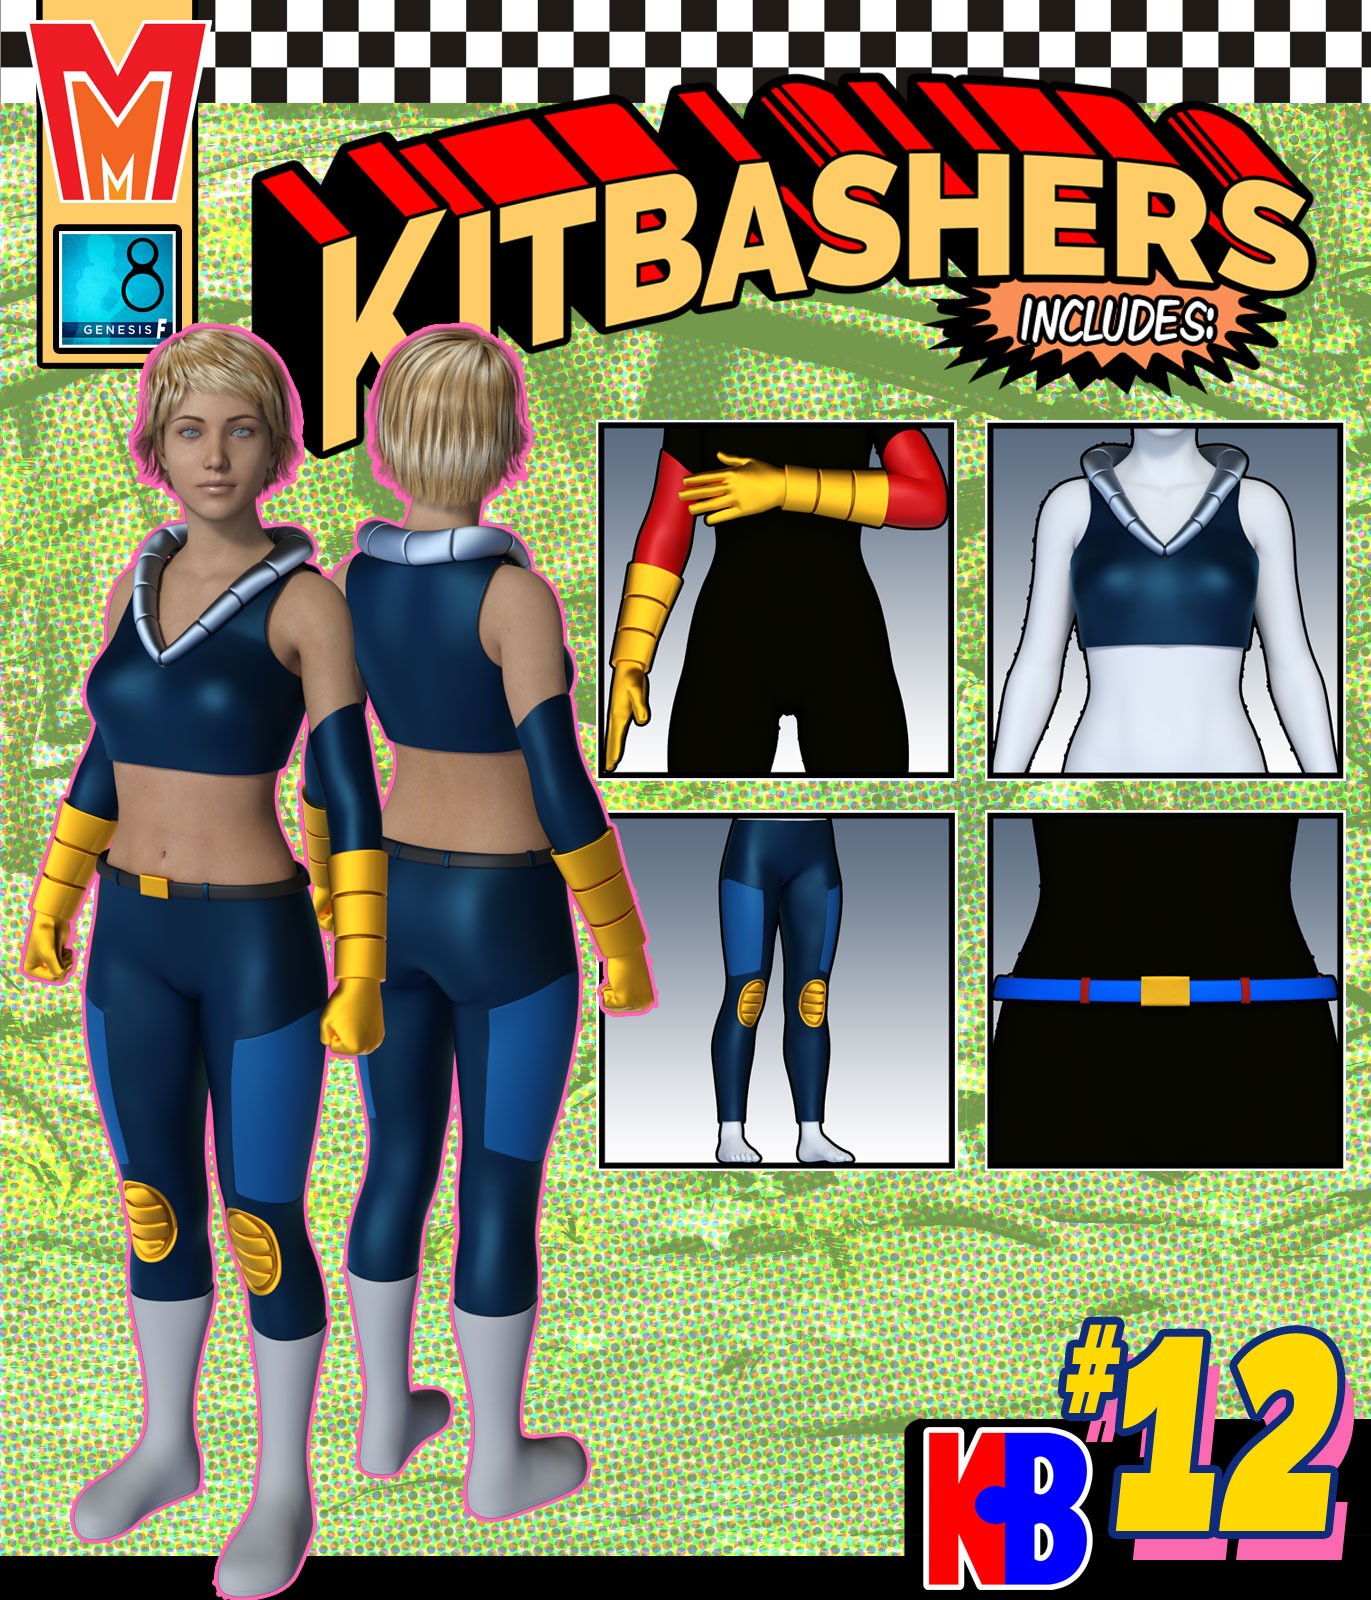 Kitbashers 012 MMG8F by: MightyMite, 3D Models by Daz 3D